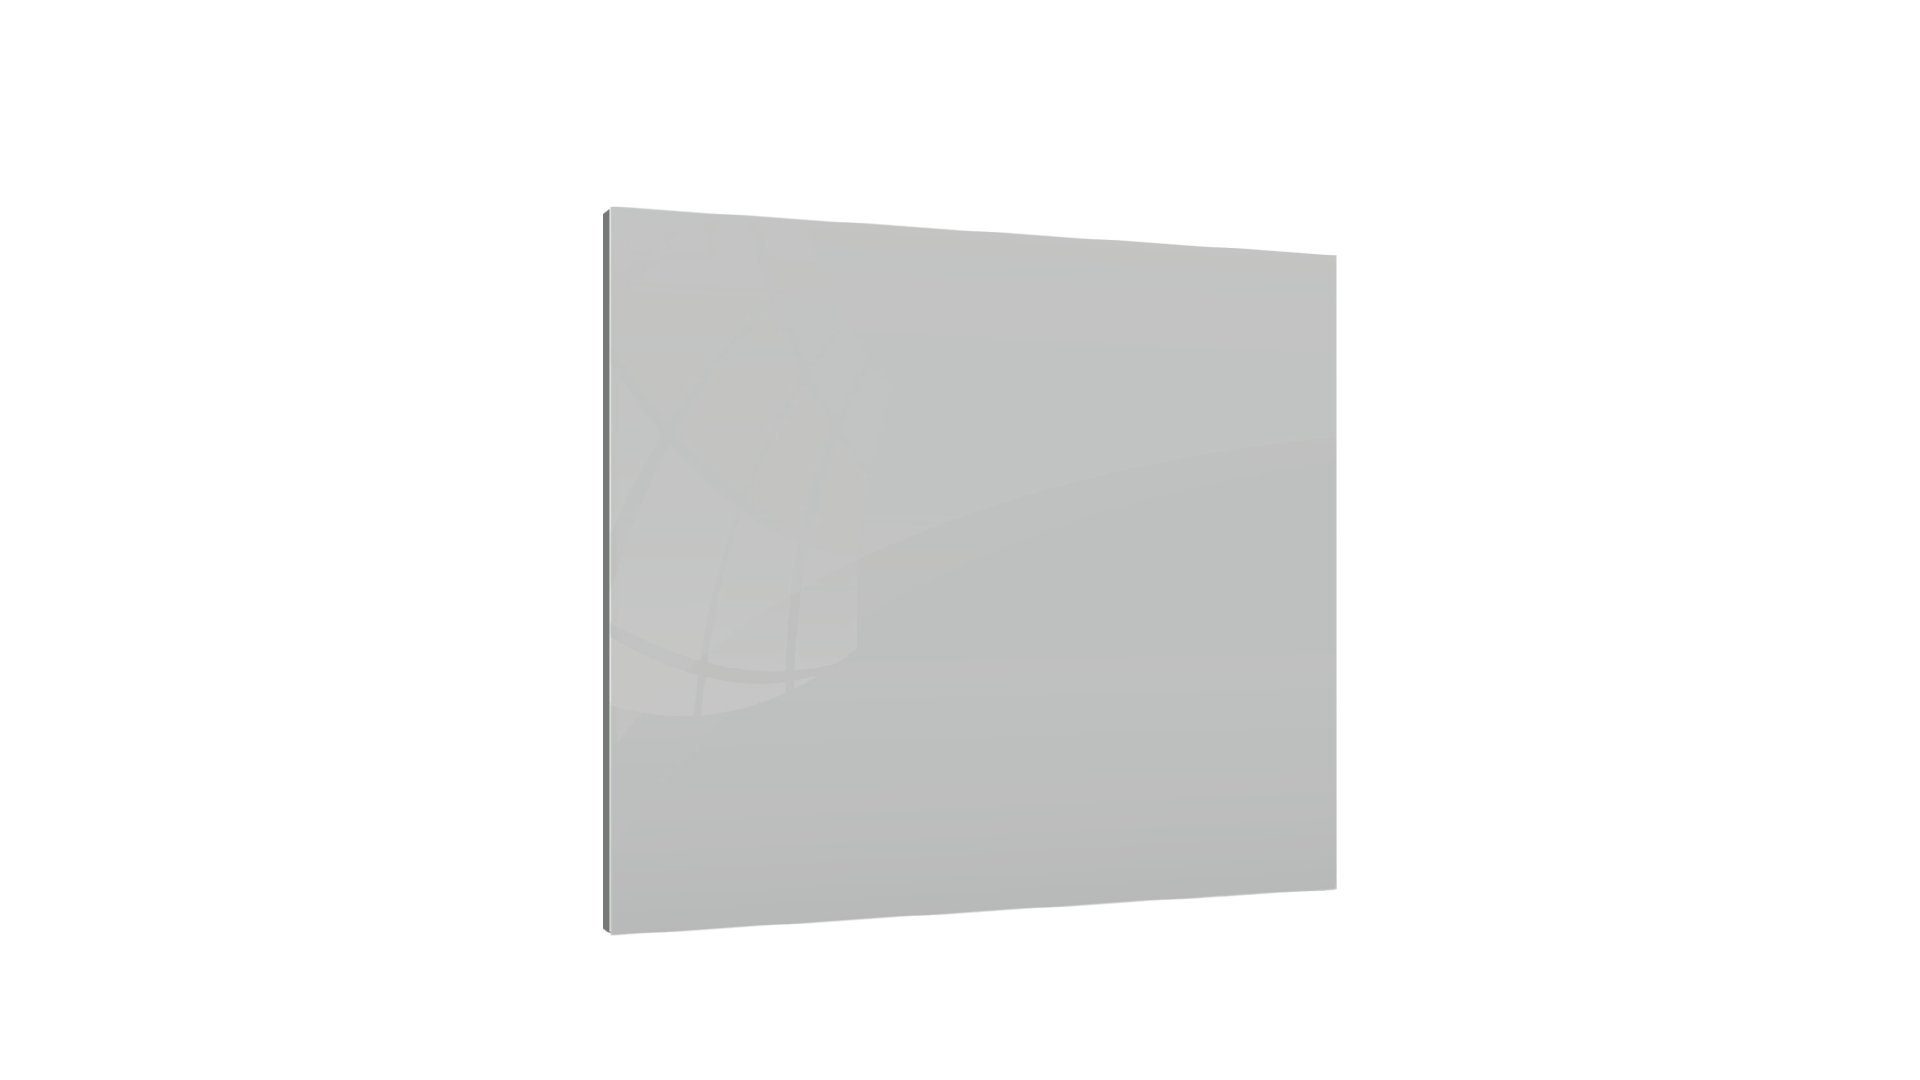 ALLboards Memoboard Glastafel rahmenlose - grau Glastafel Magnetische